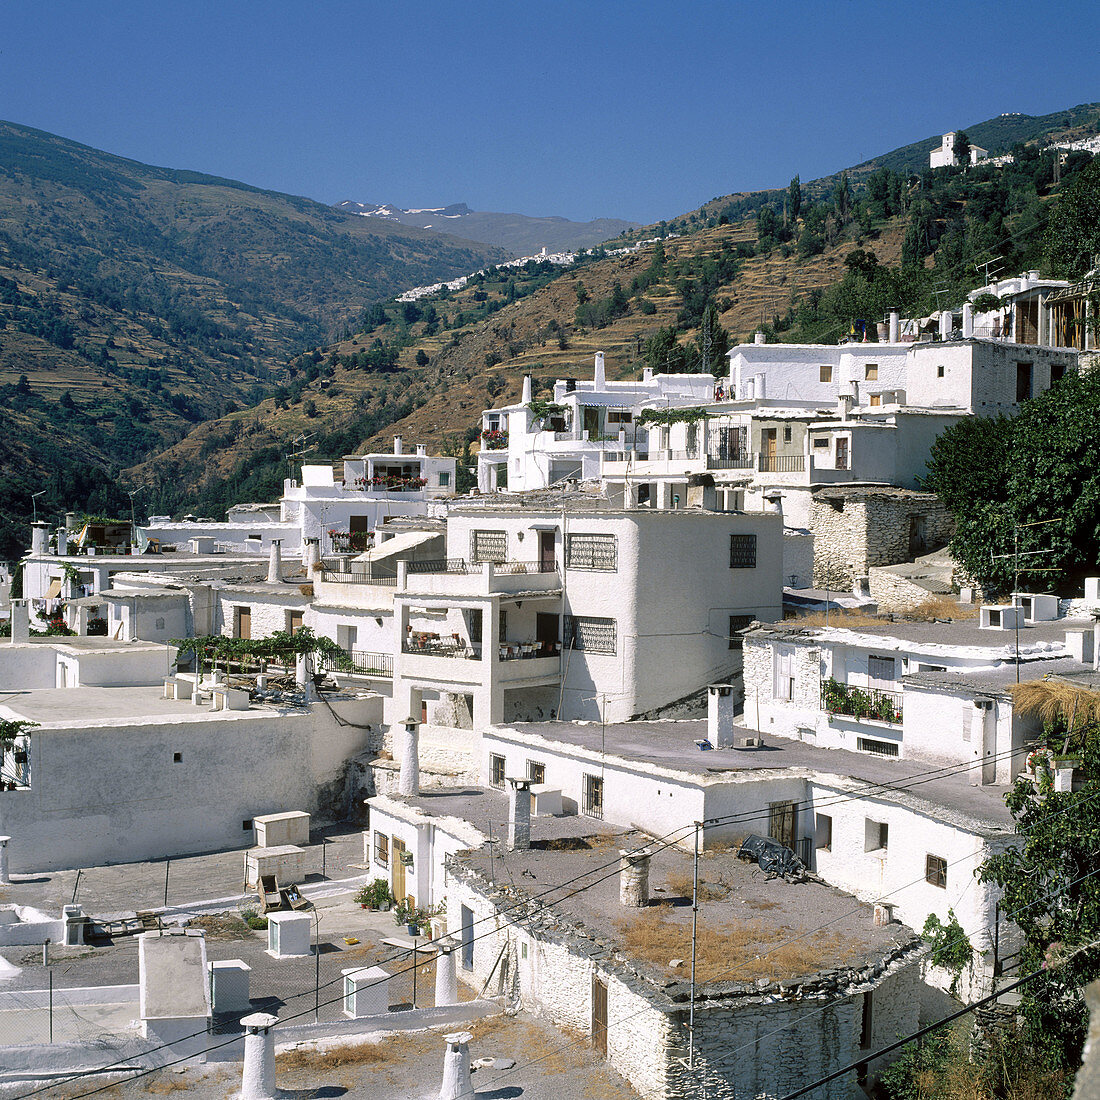 Pampaneira. Alpujarras Mountains, Granada province. Spain